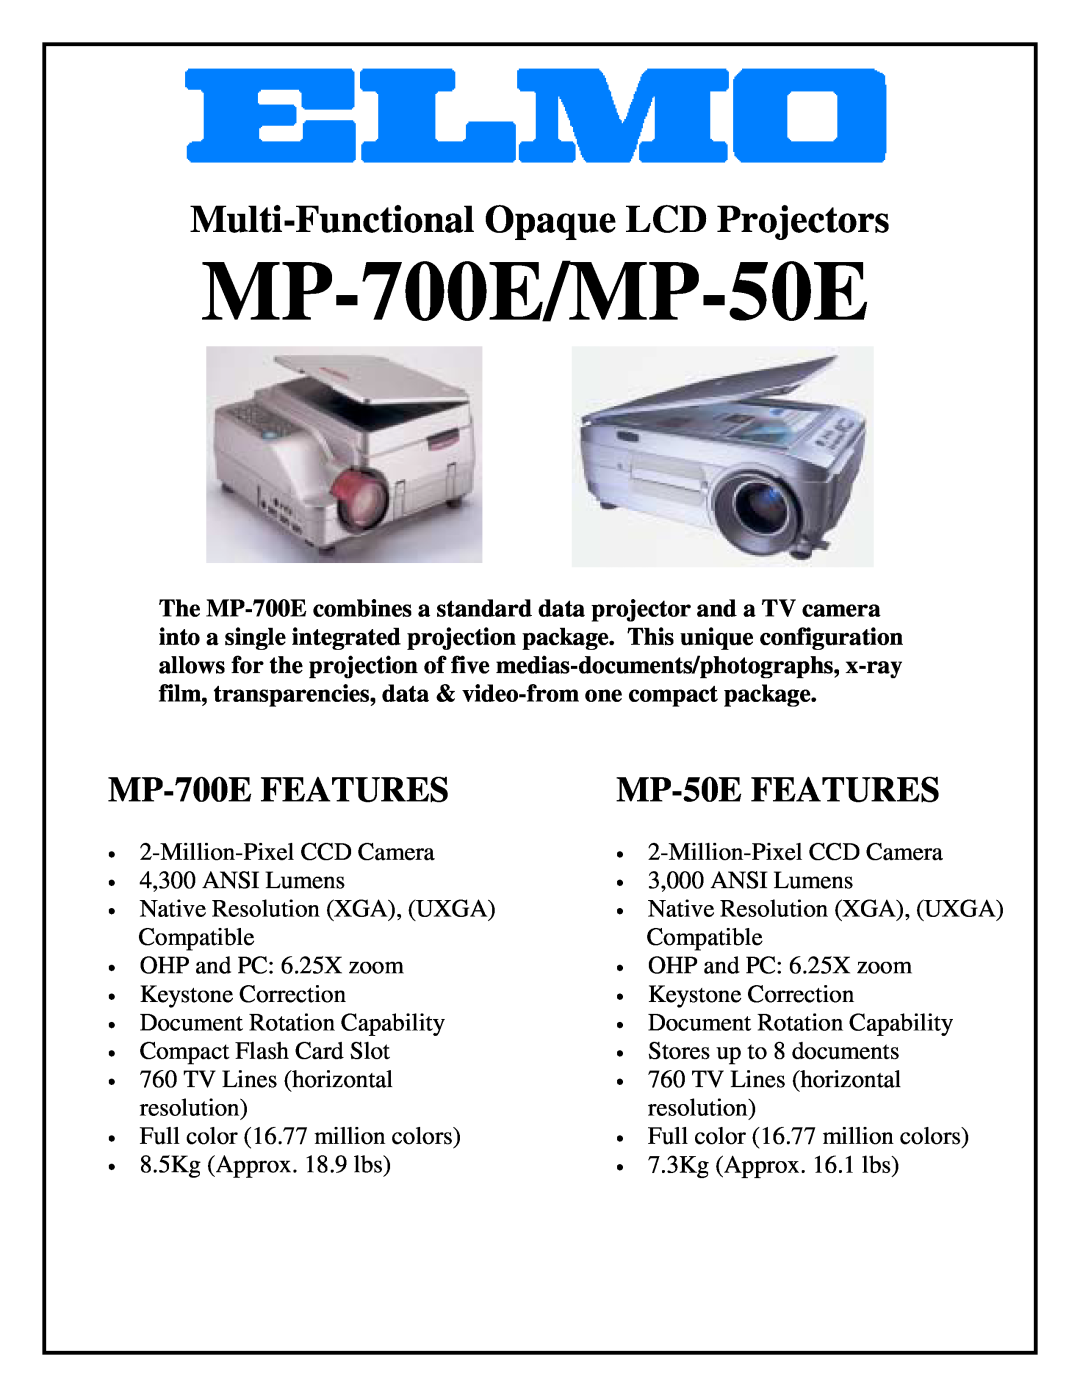 Elmo manual MP-700E/MP-50E, Multi-Functional Opaque LCD Projectors, MP-700E FEATURES, MP-50E FEATURES 